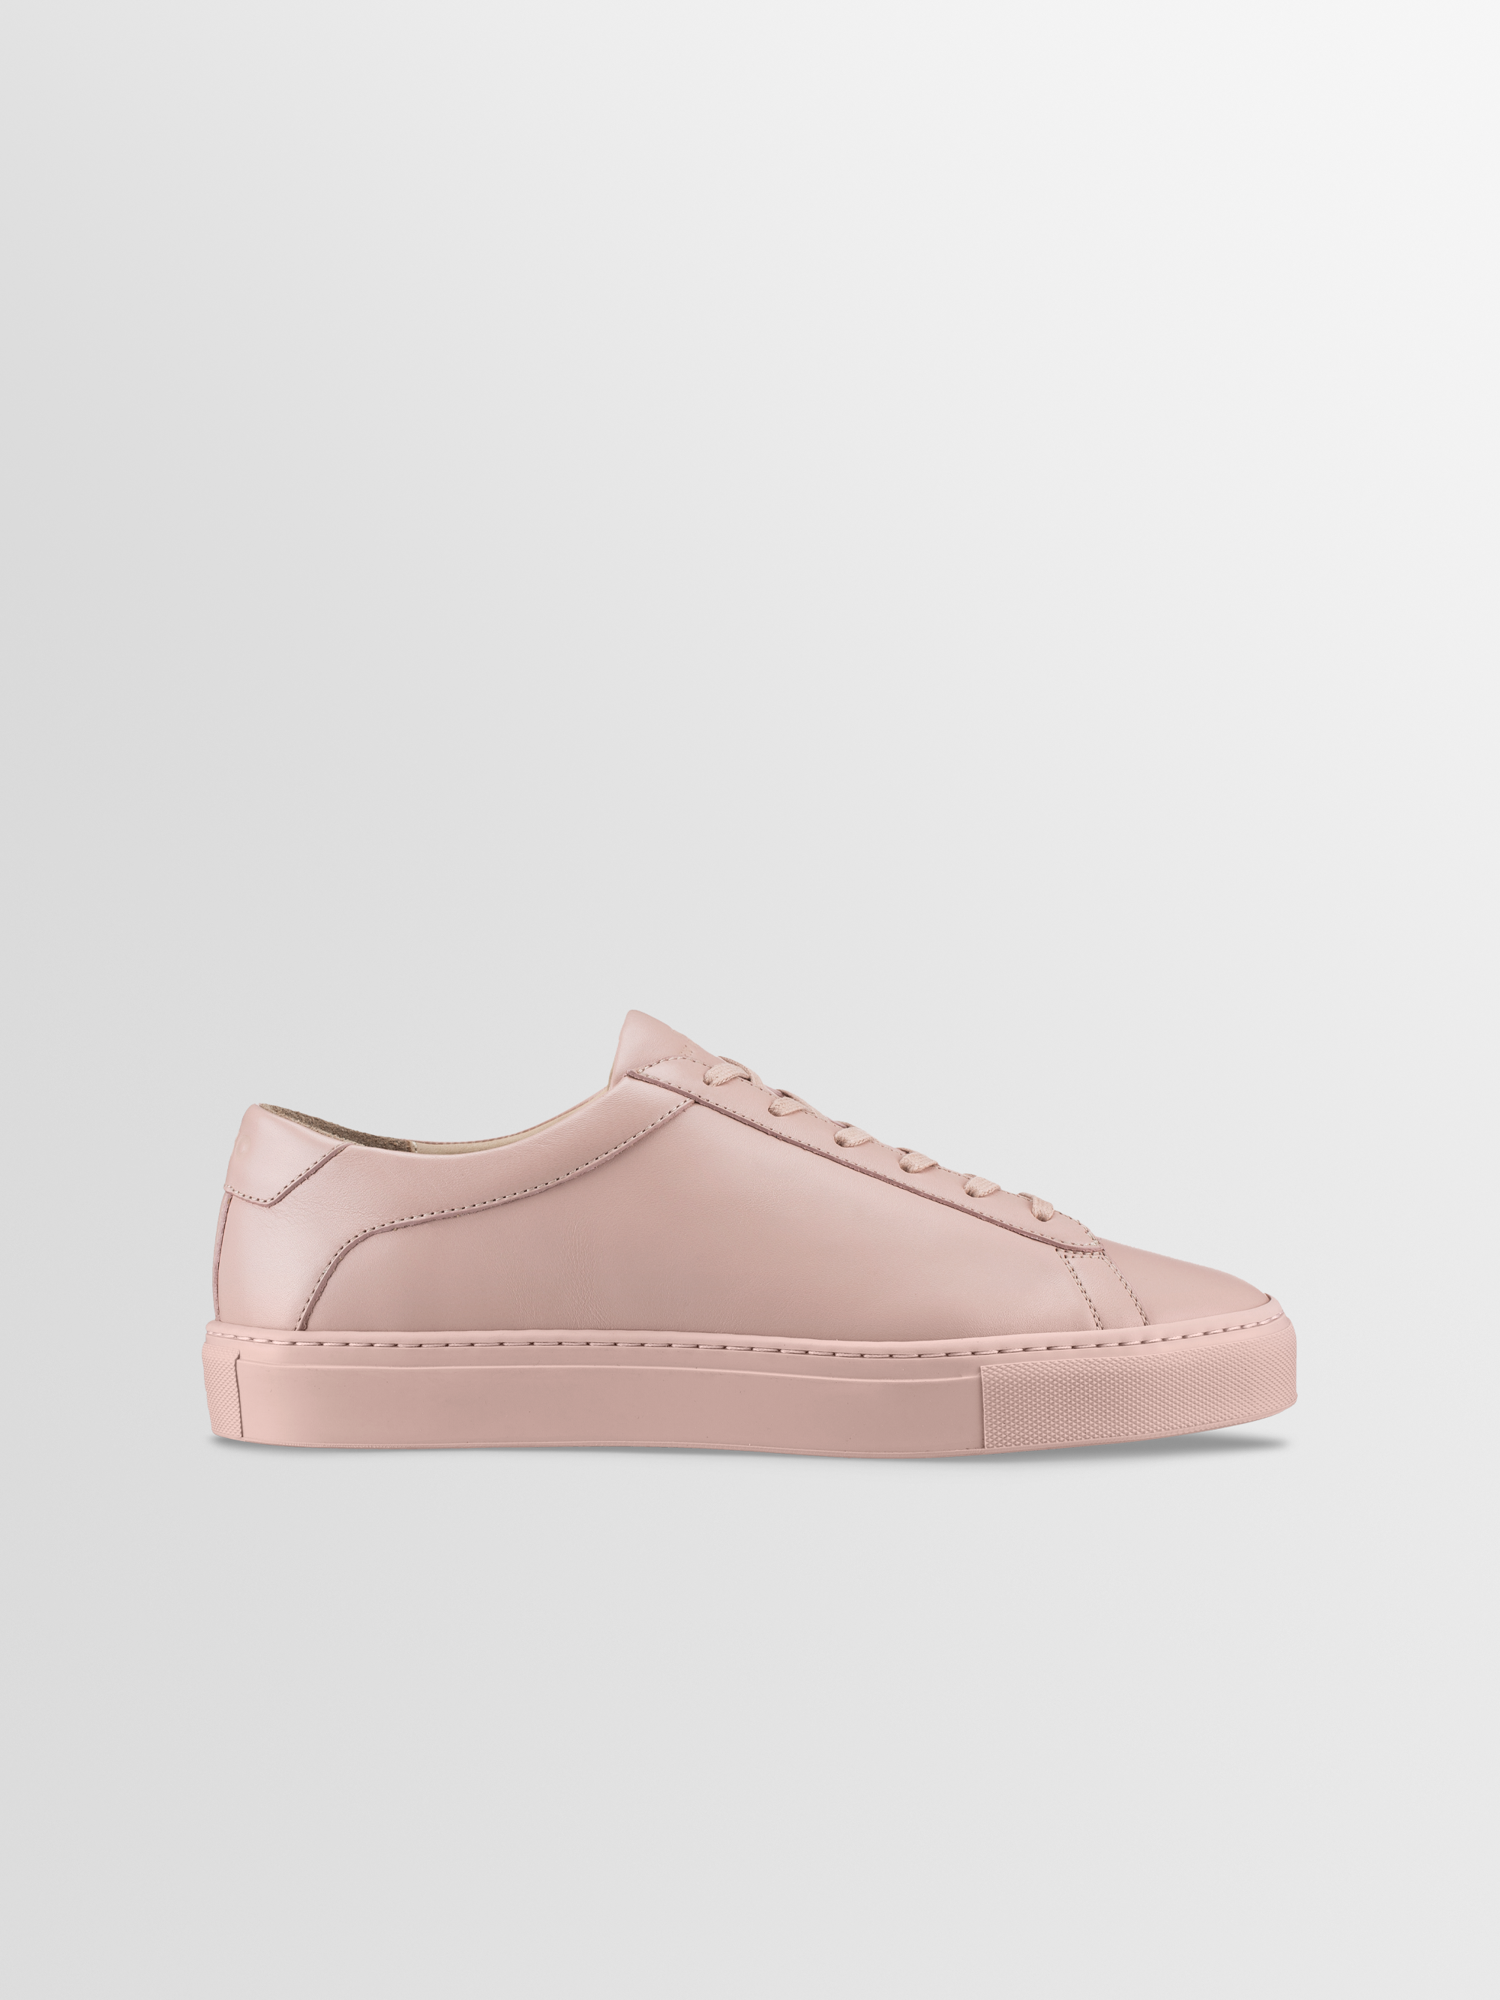 Men's Low-top Leather Sneakers | in Pink Quartz | Koio – KOIO